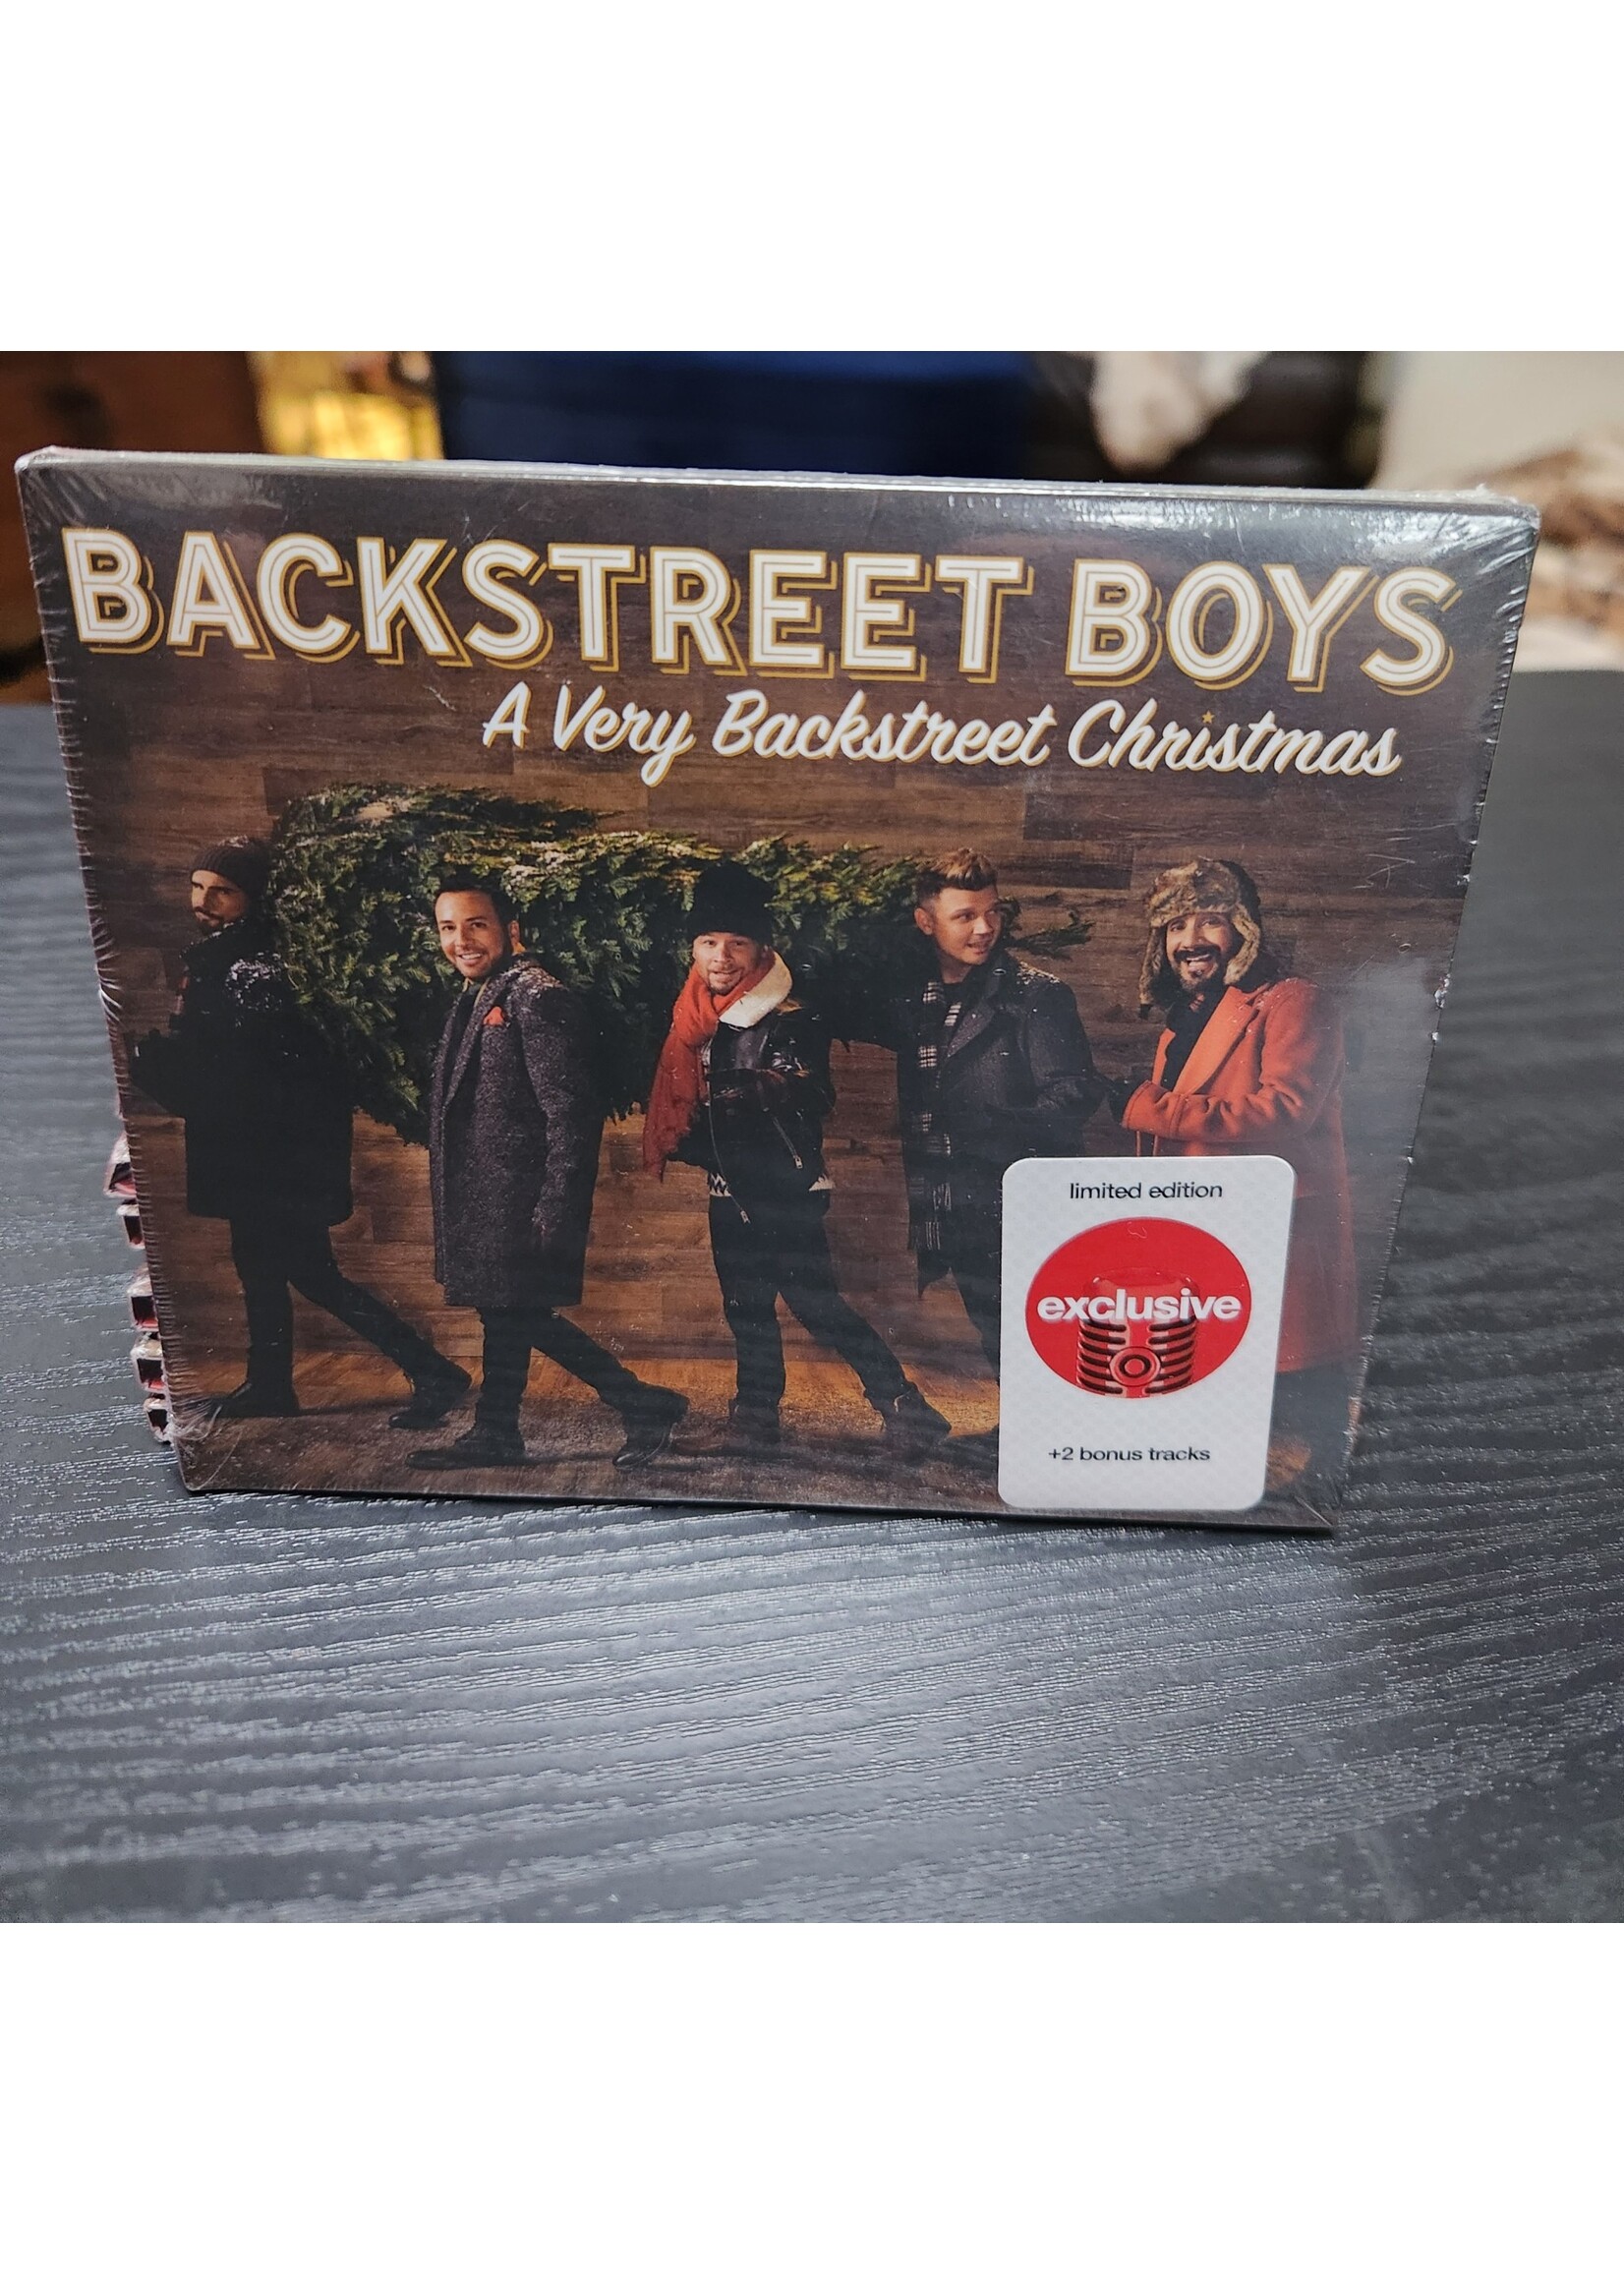 Backstreet Boys - A Very Backstreet Christmas CD (Target Exclusive)